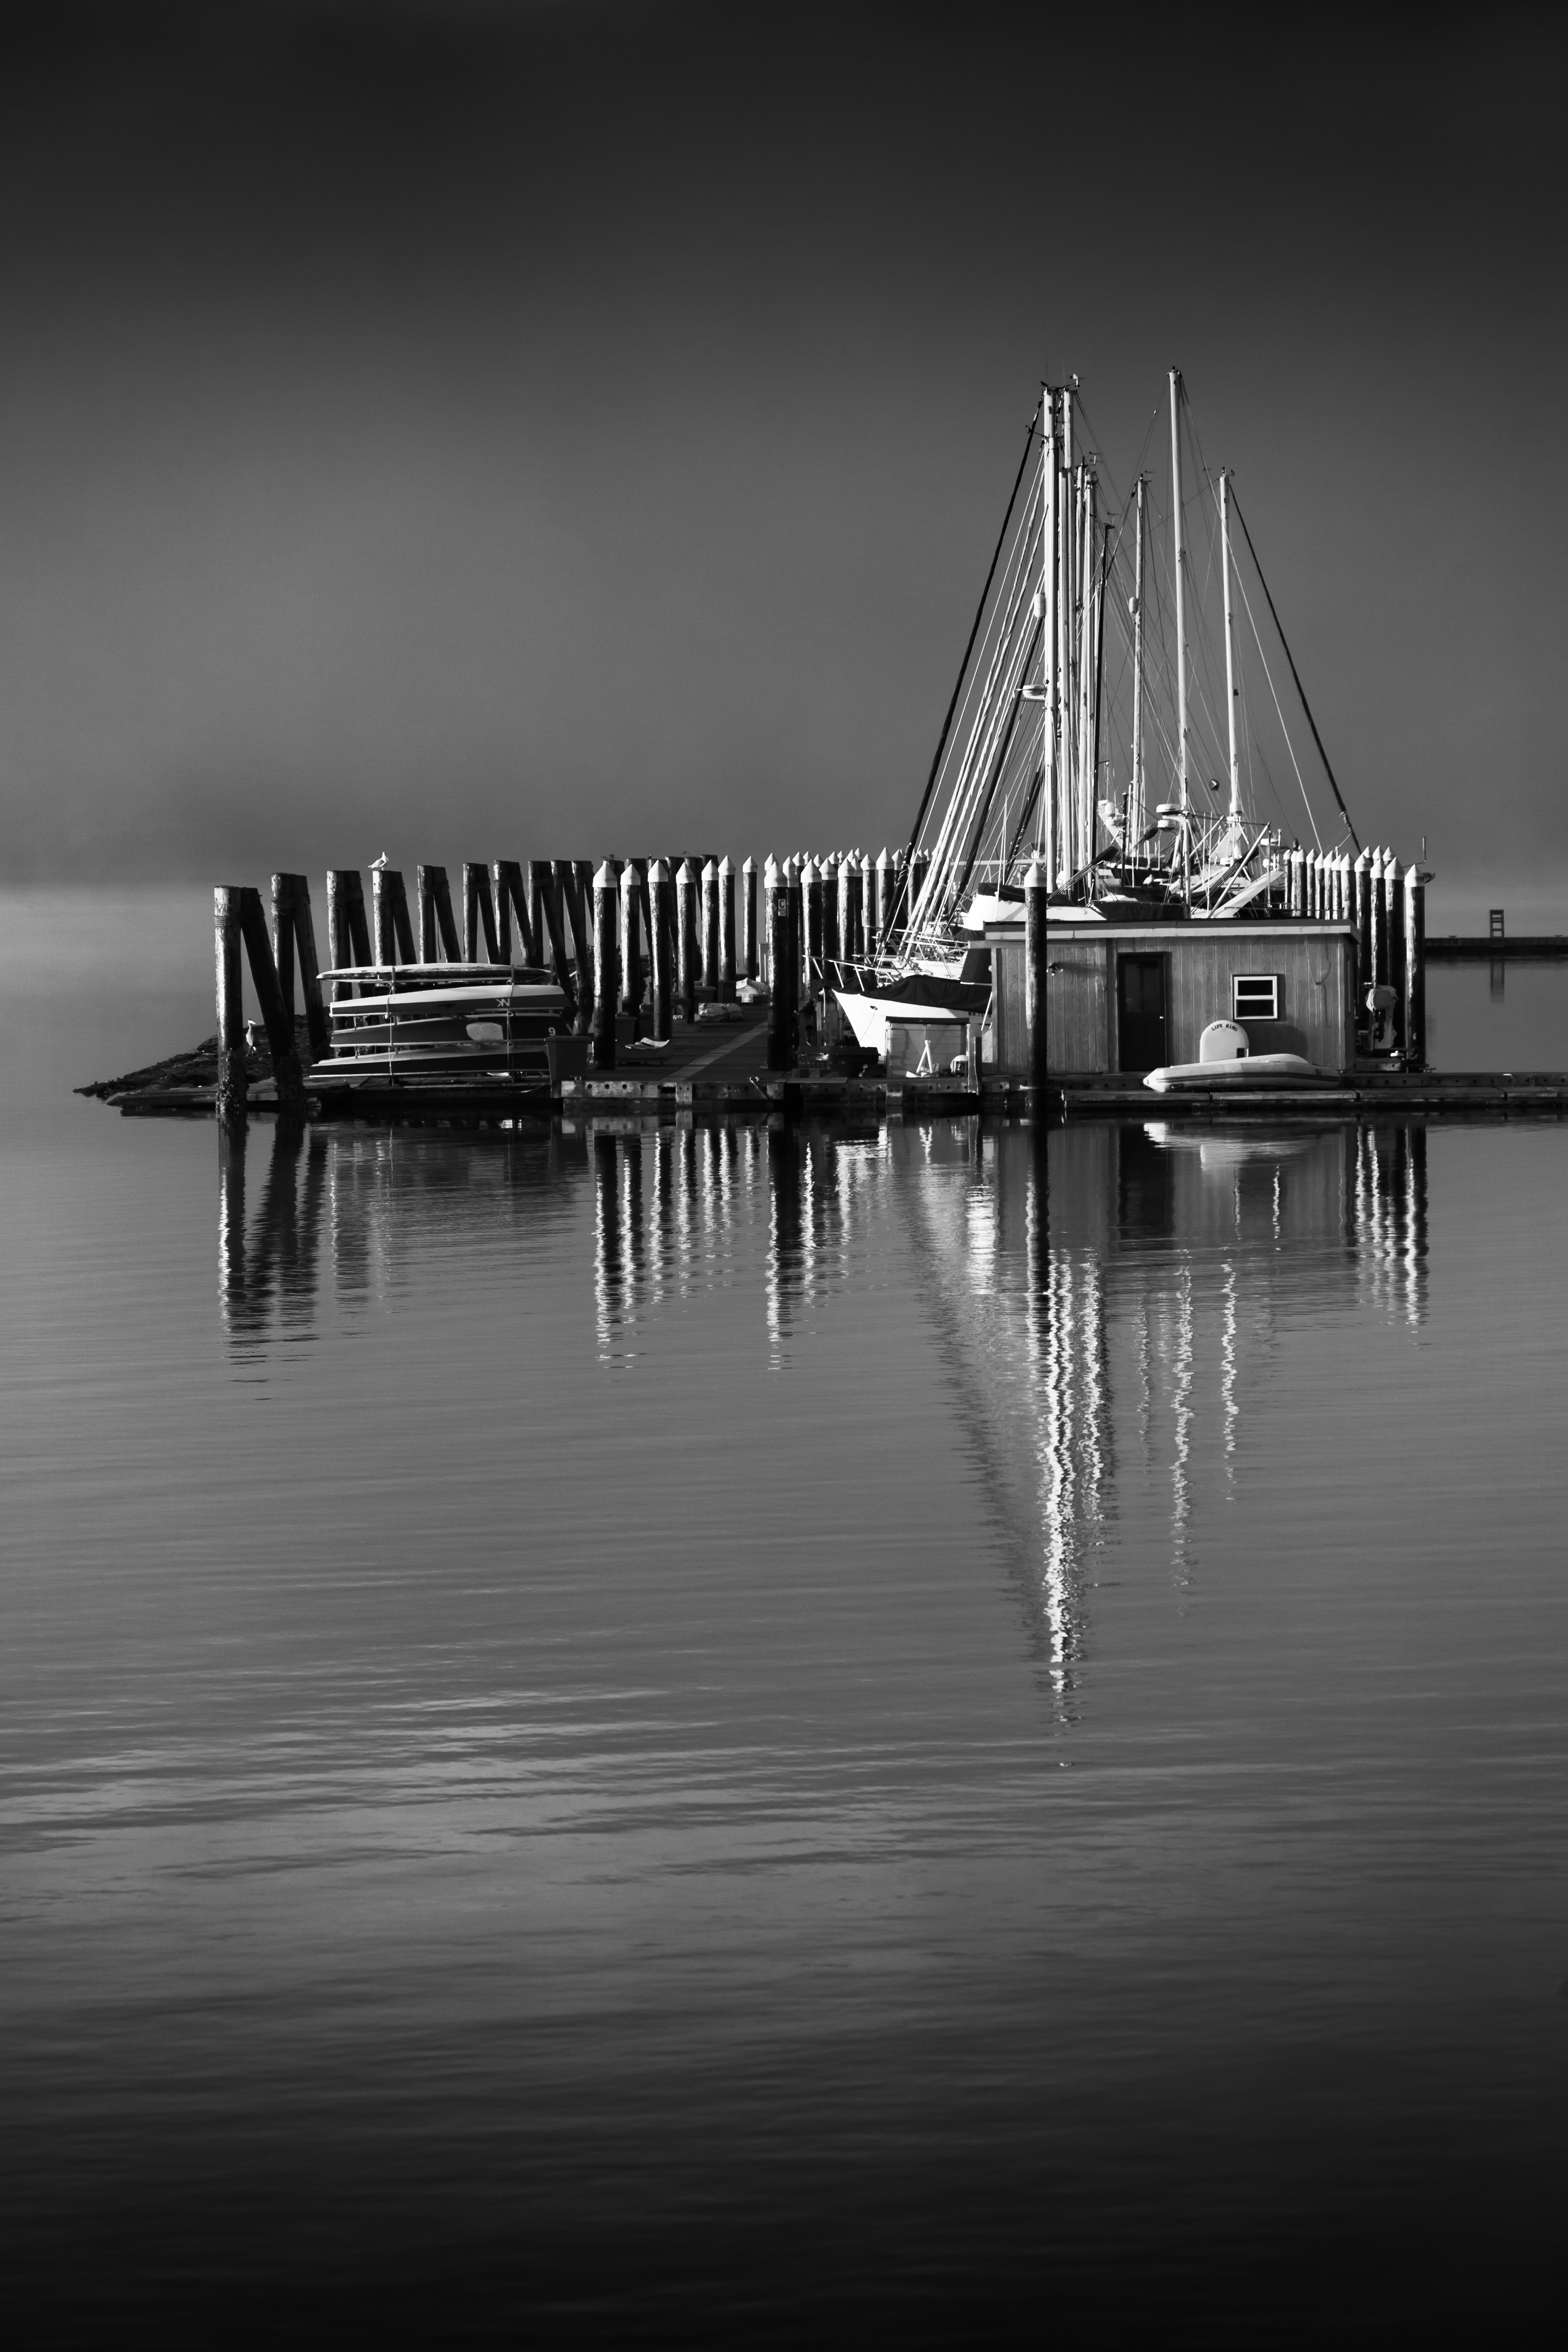 29: Liberty Bay Fog